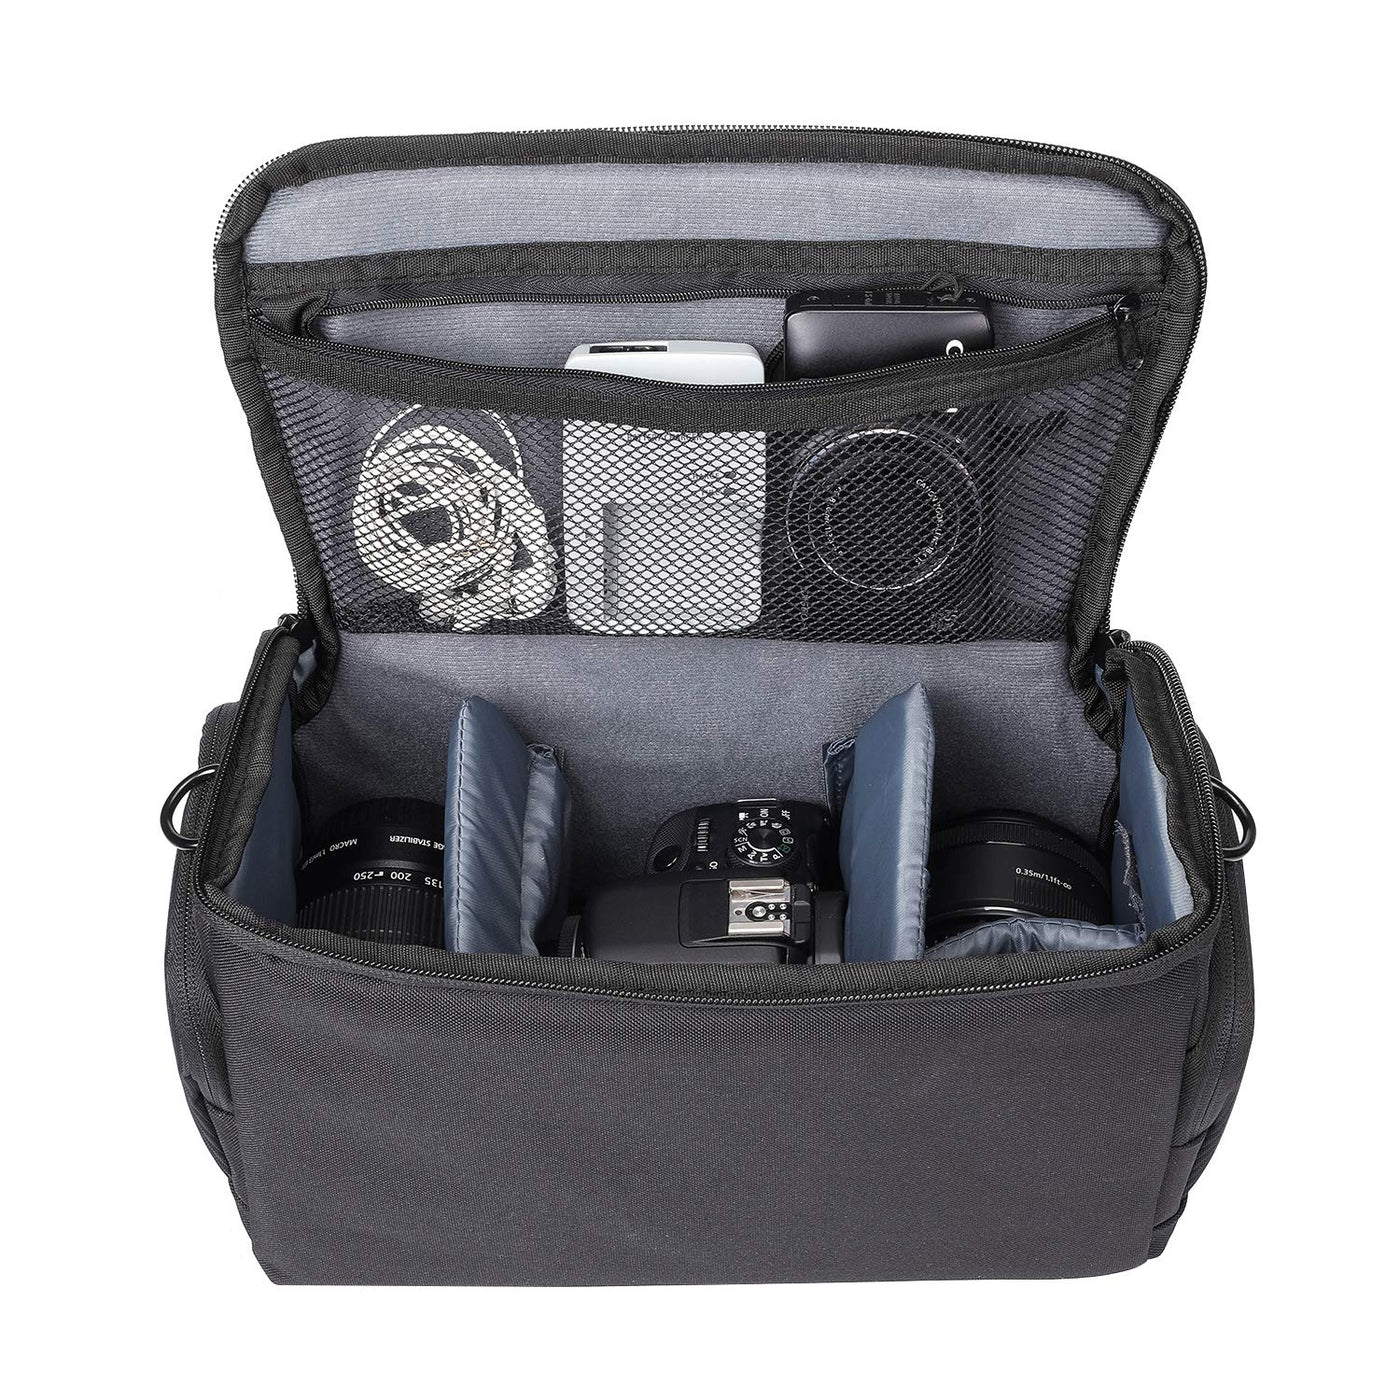 Photo bag for SLR cameras Easy SLR XL large camera bag SLR camera for body and 3 lenses